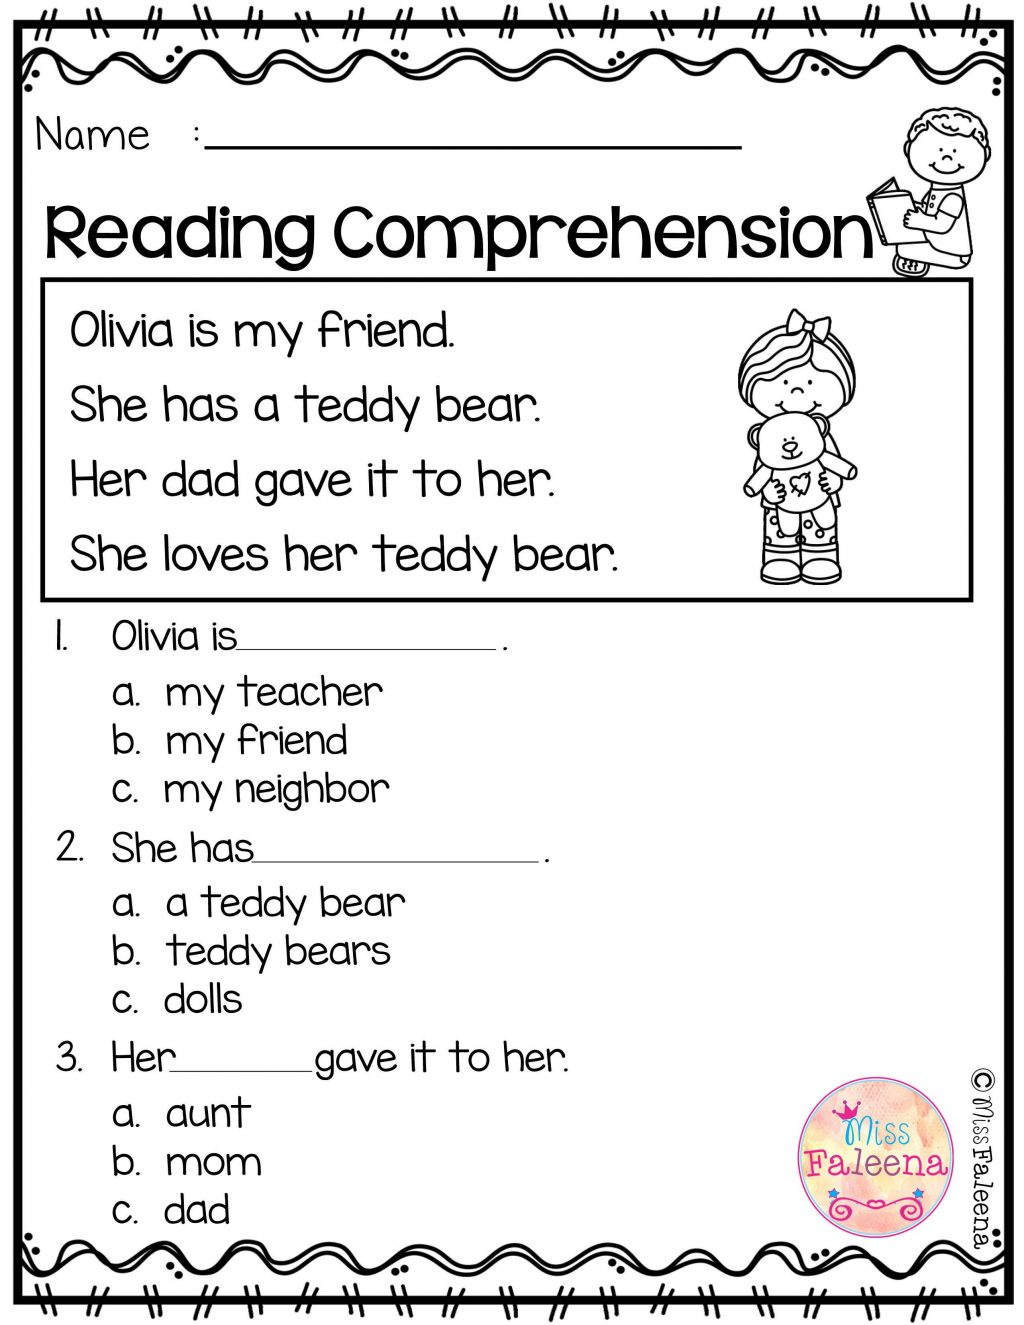 Worksheet Ideas Free Kindergarten Readingeets Printable For